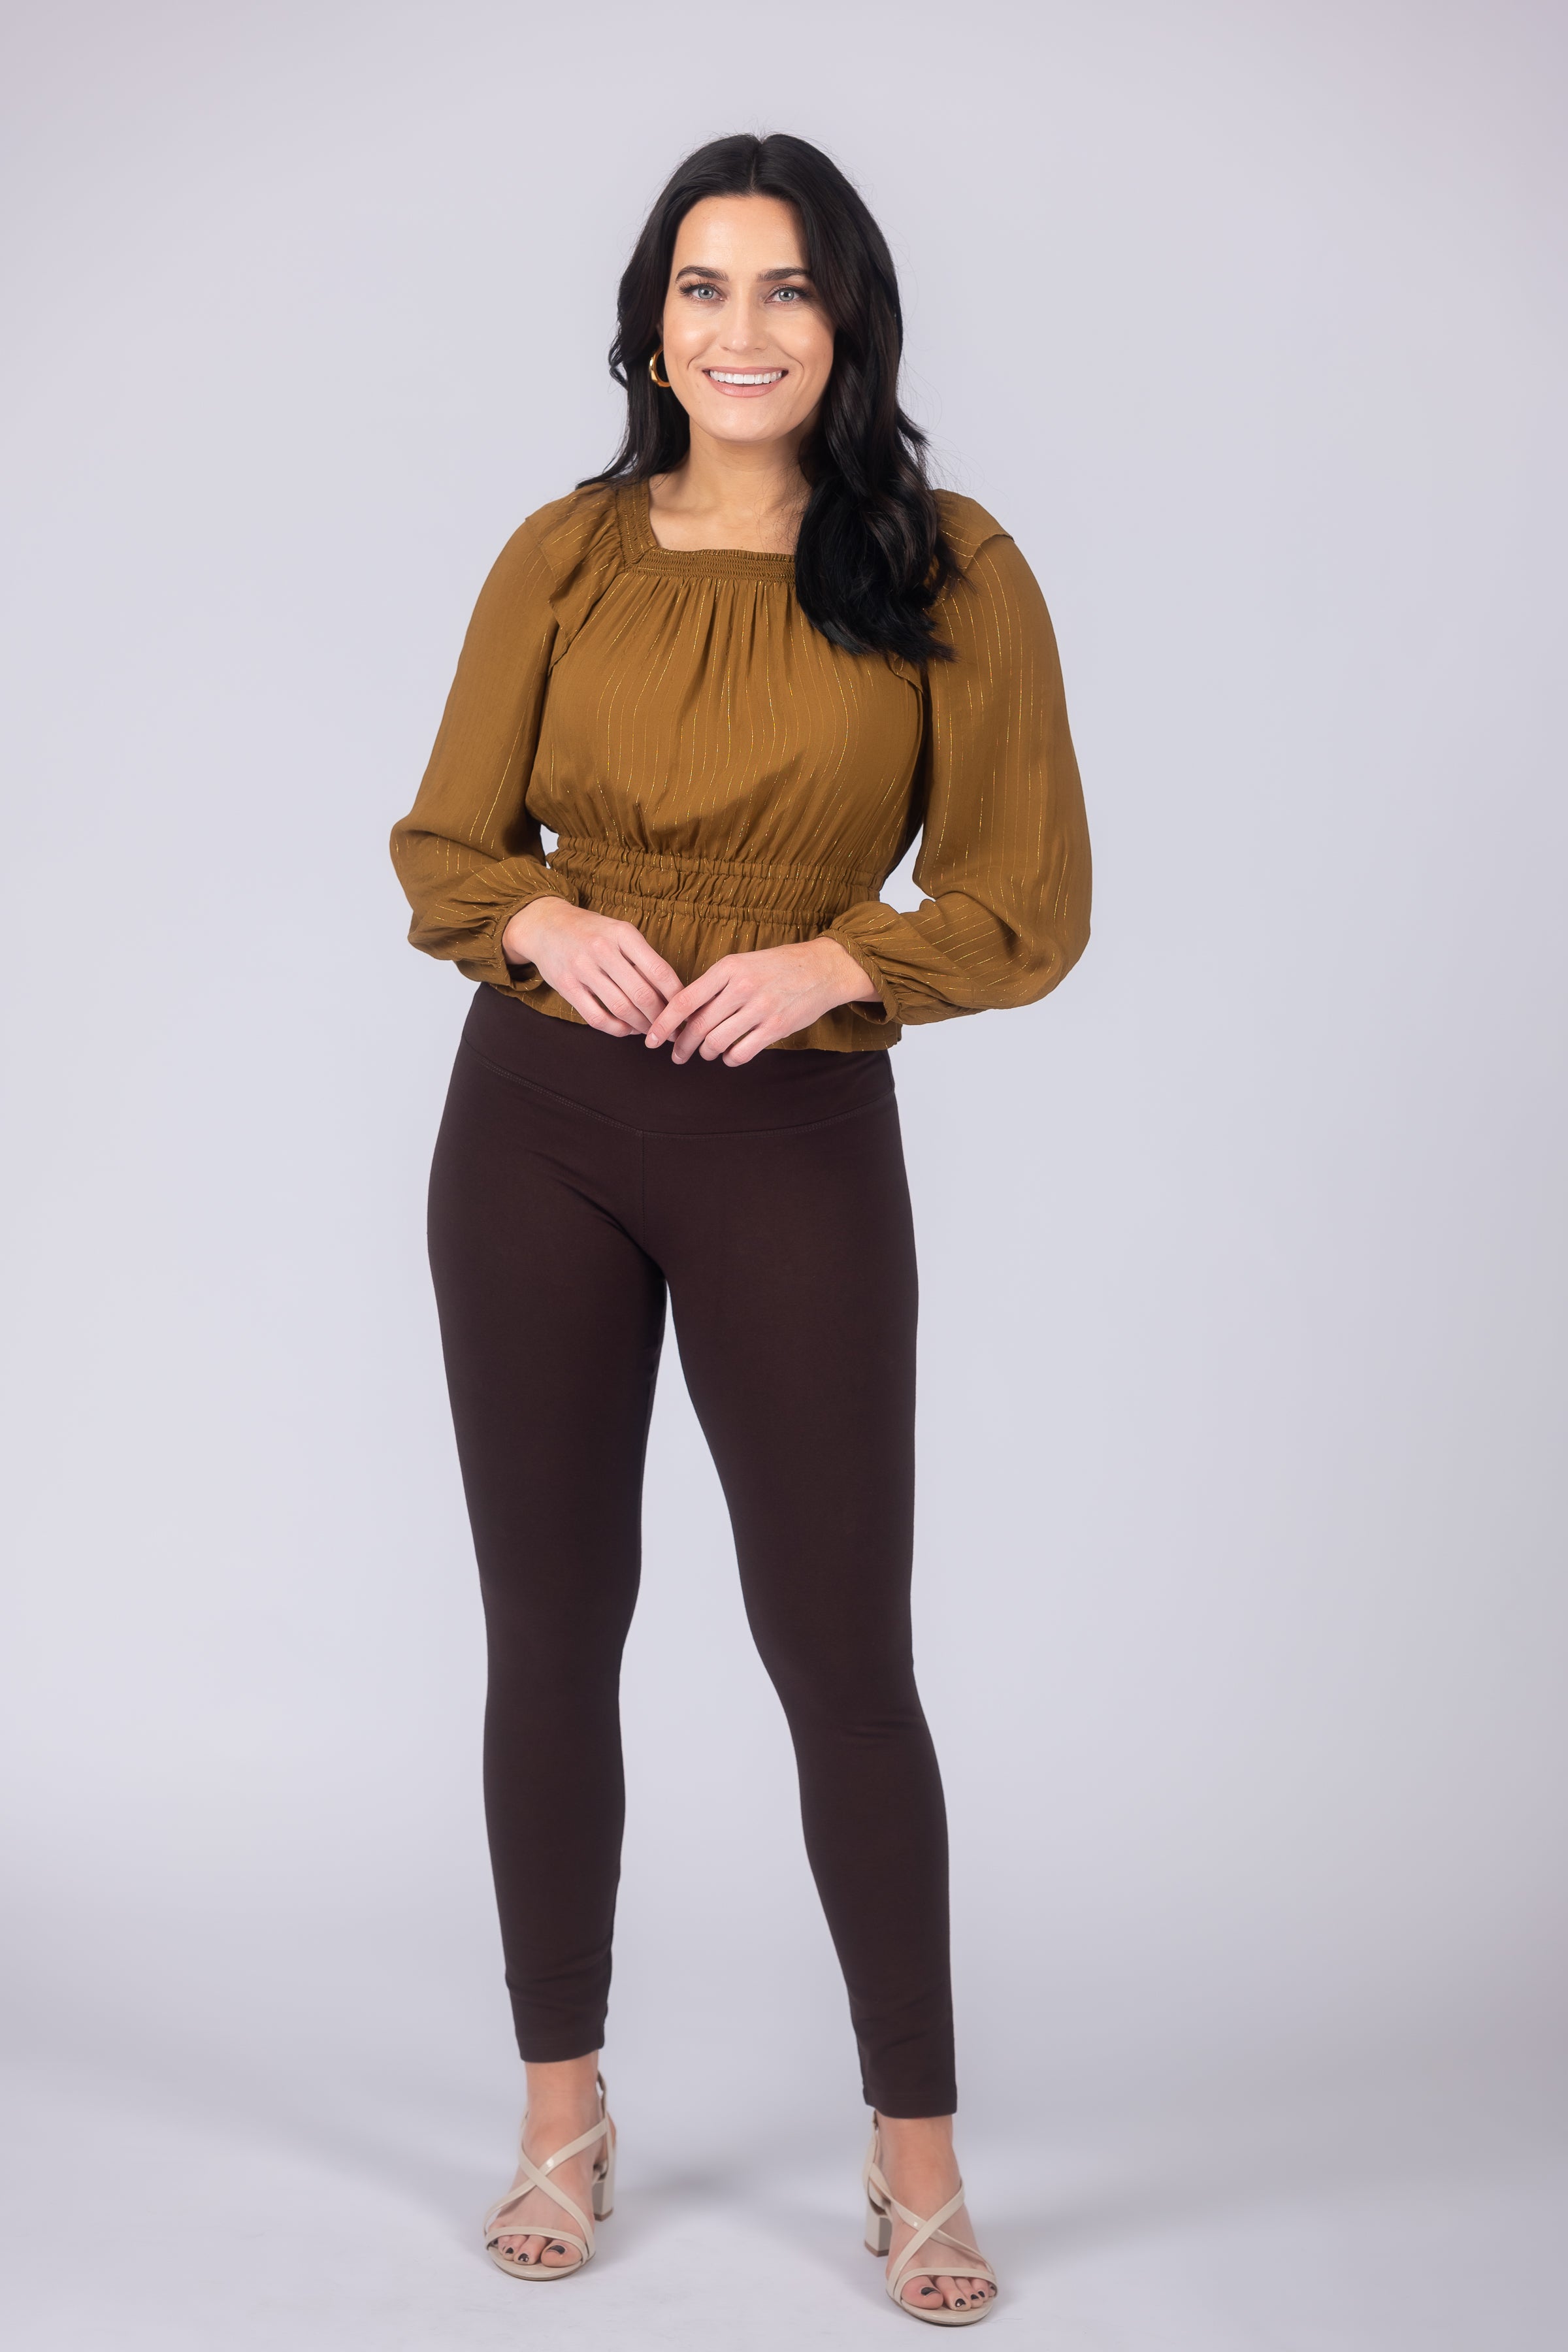 Leggings Plus-Size Workout Clothing | Nordstrom